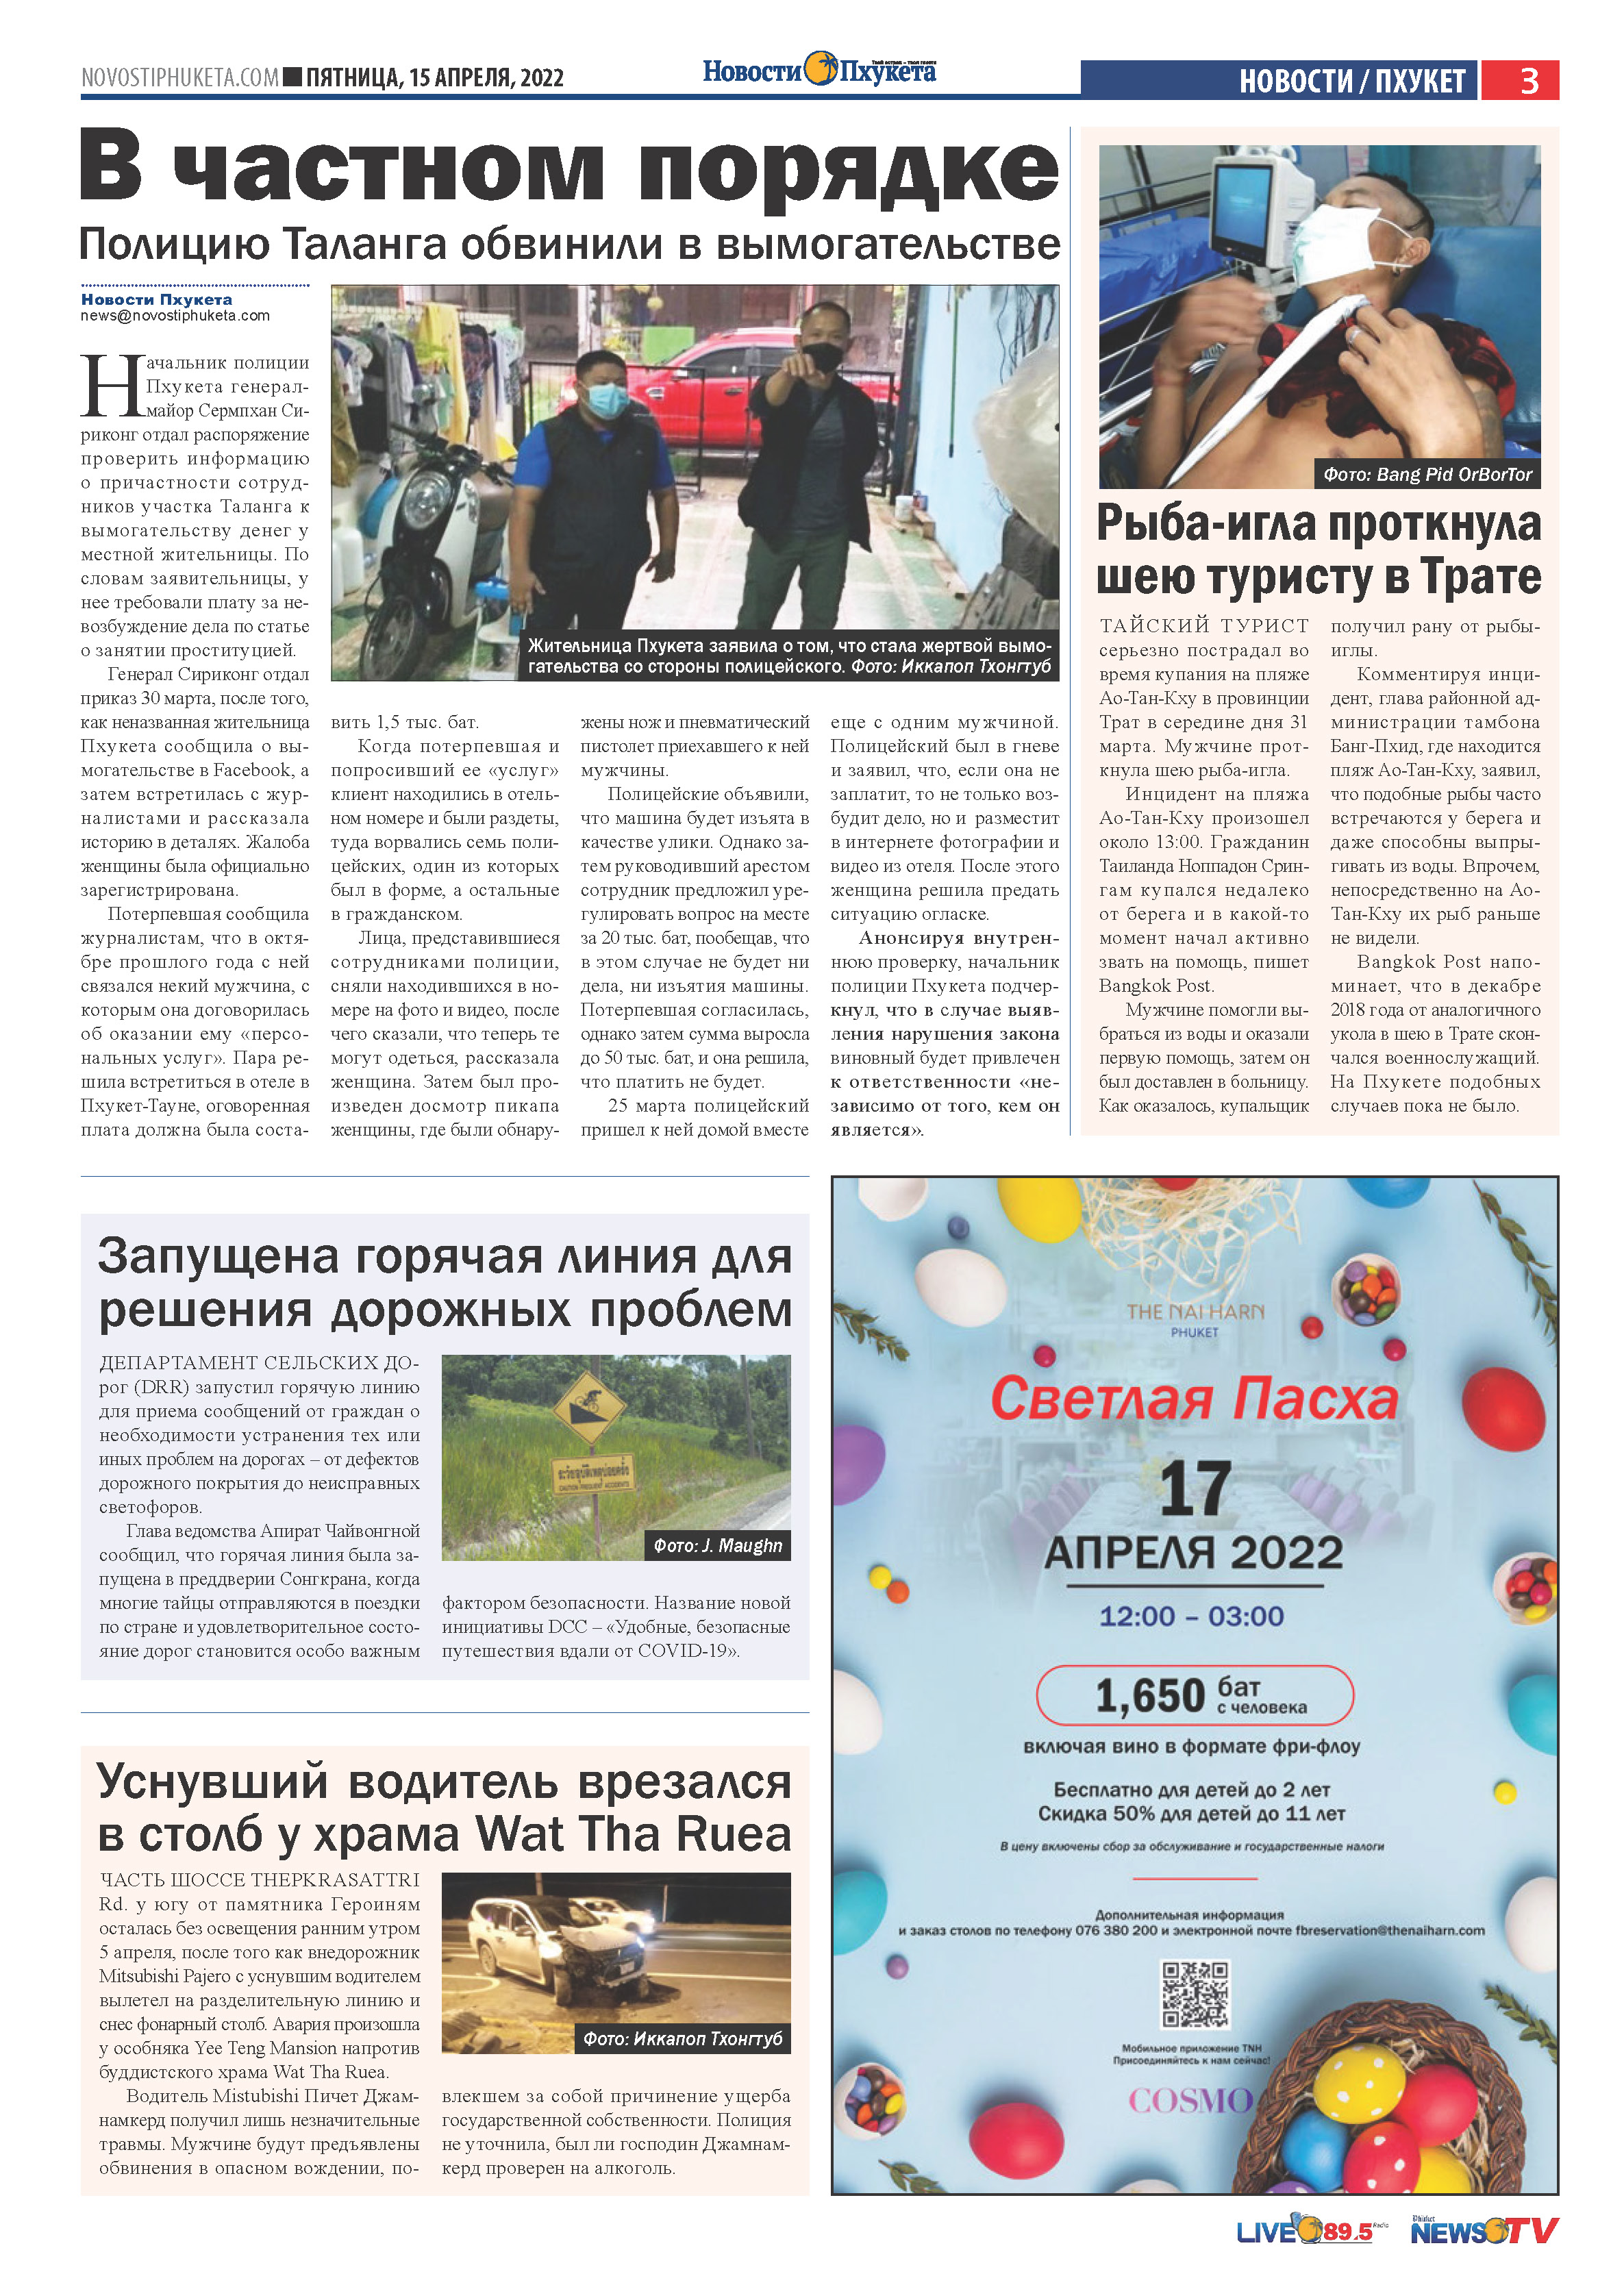 Phuket Newspaper - https://www.novostiphuketa.com/archive/15-04-2022/15-04-2022_Page_03.jpg